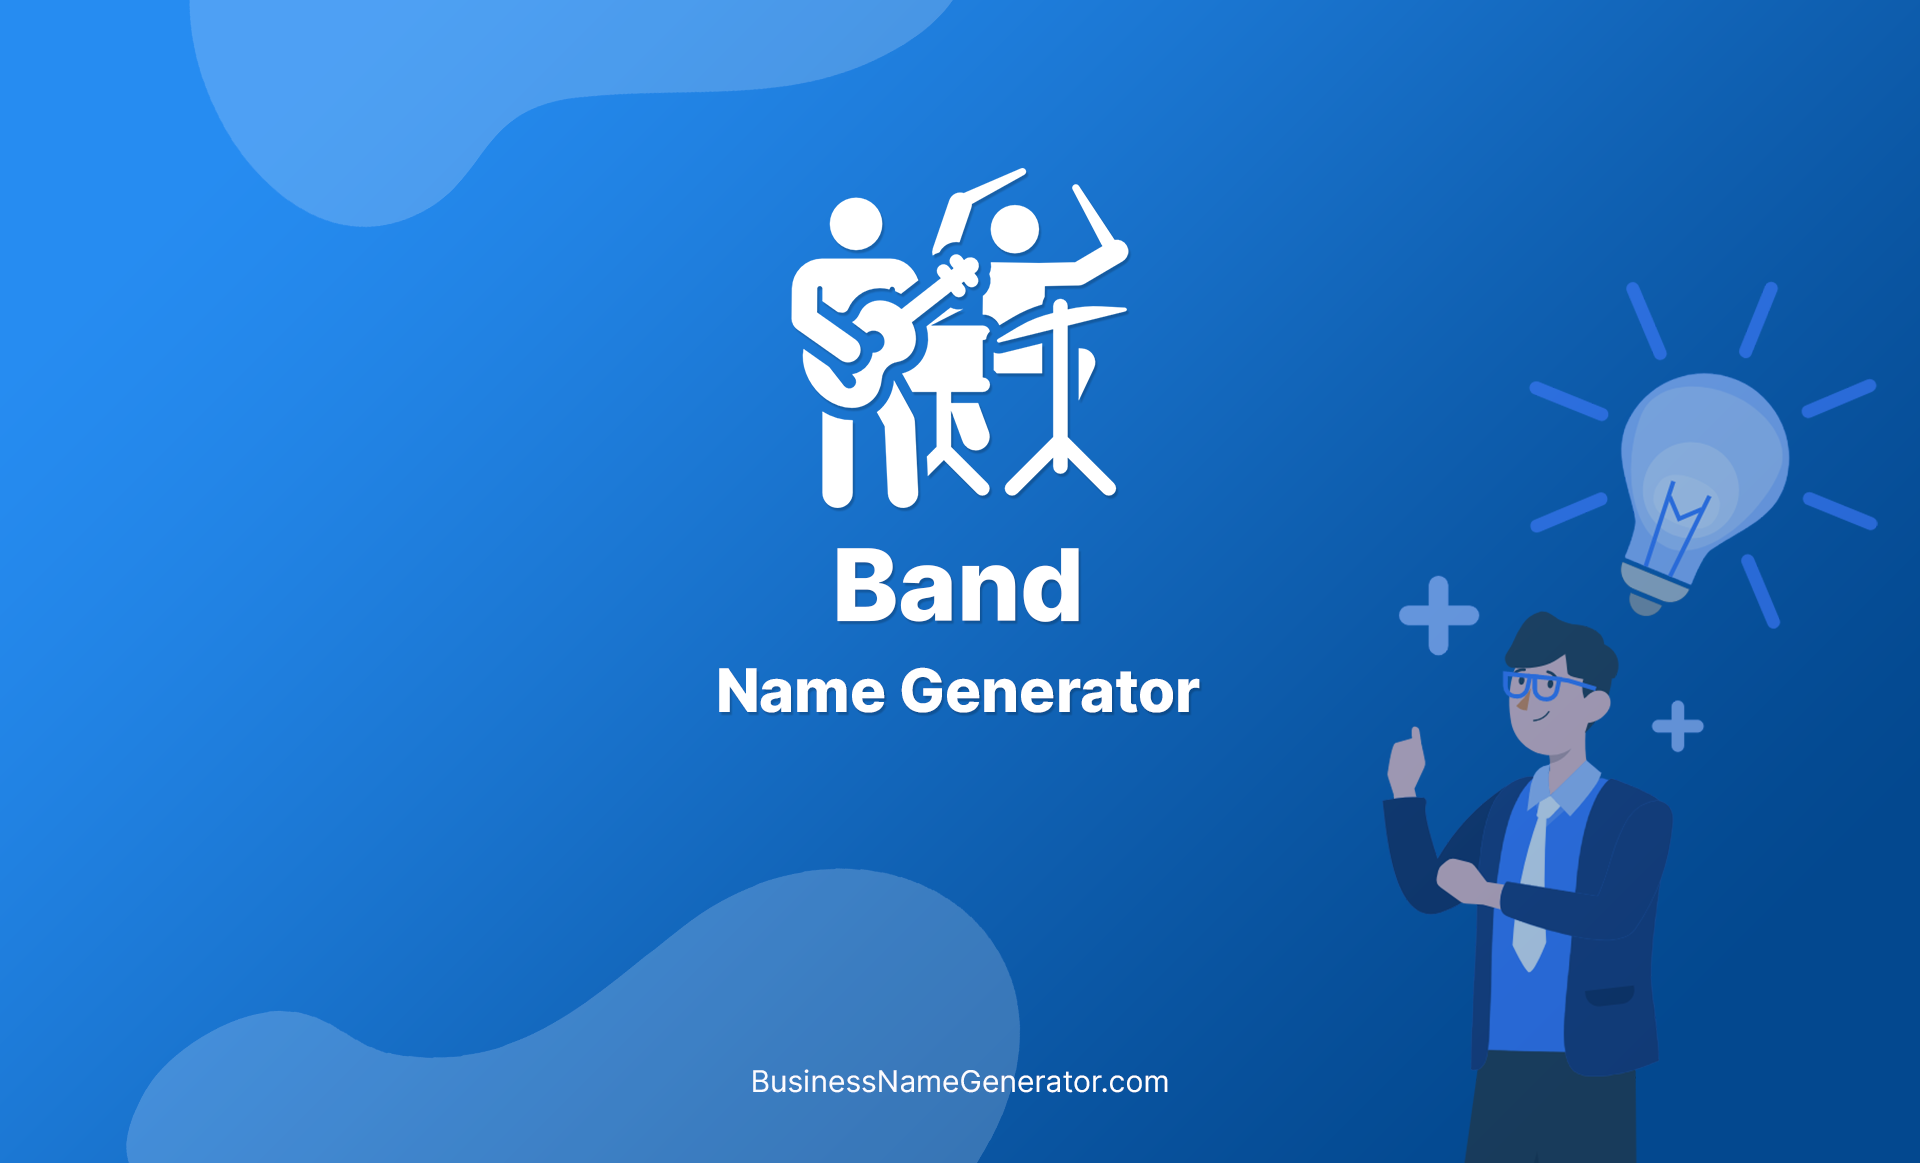 Band Name Generator